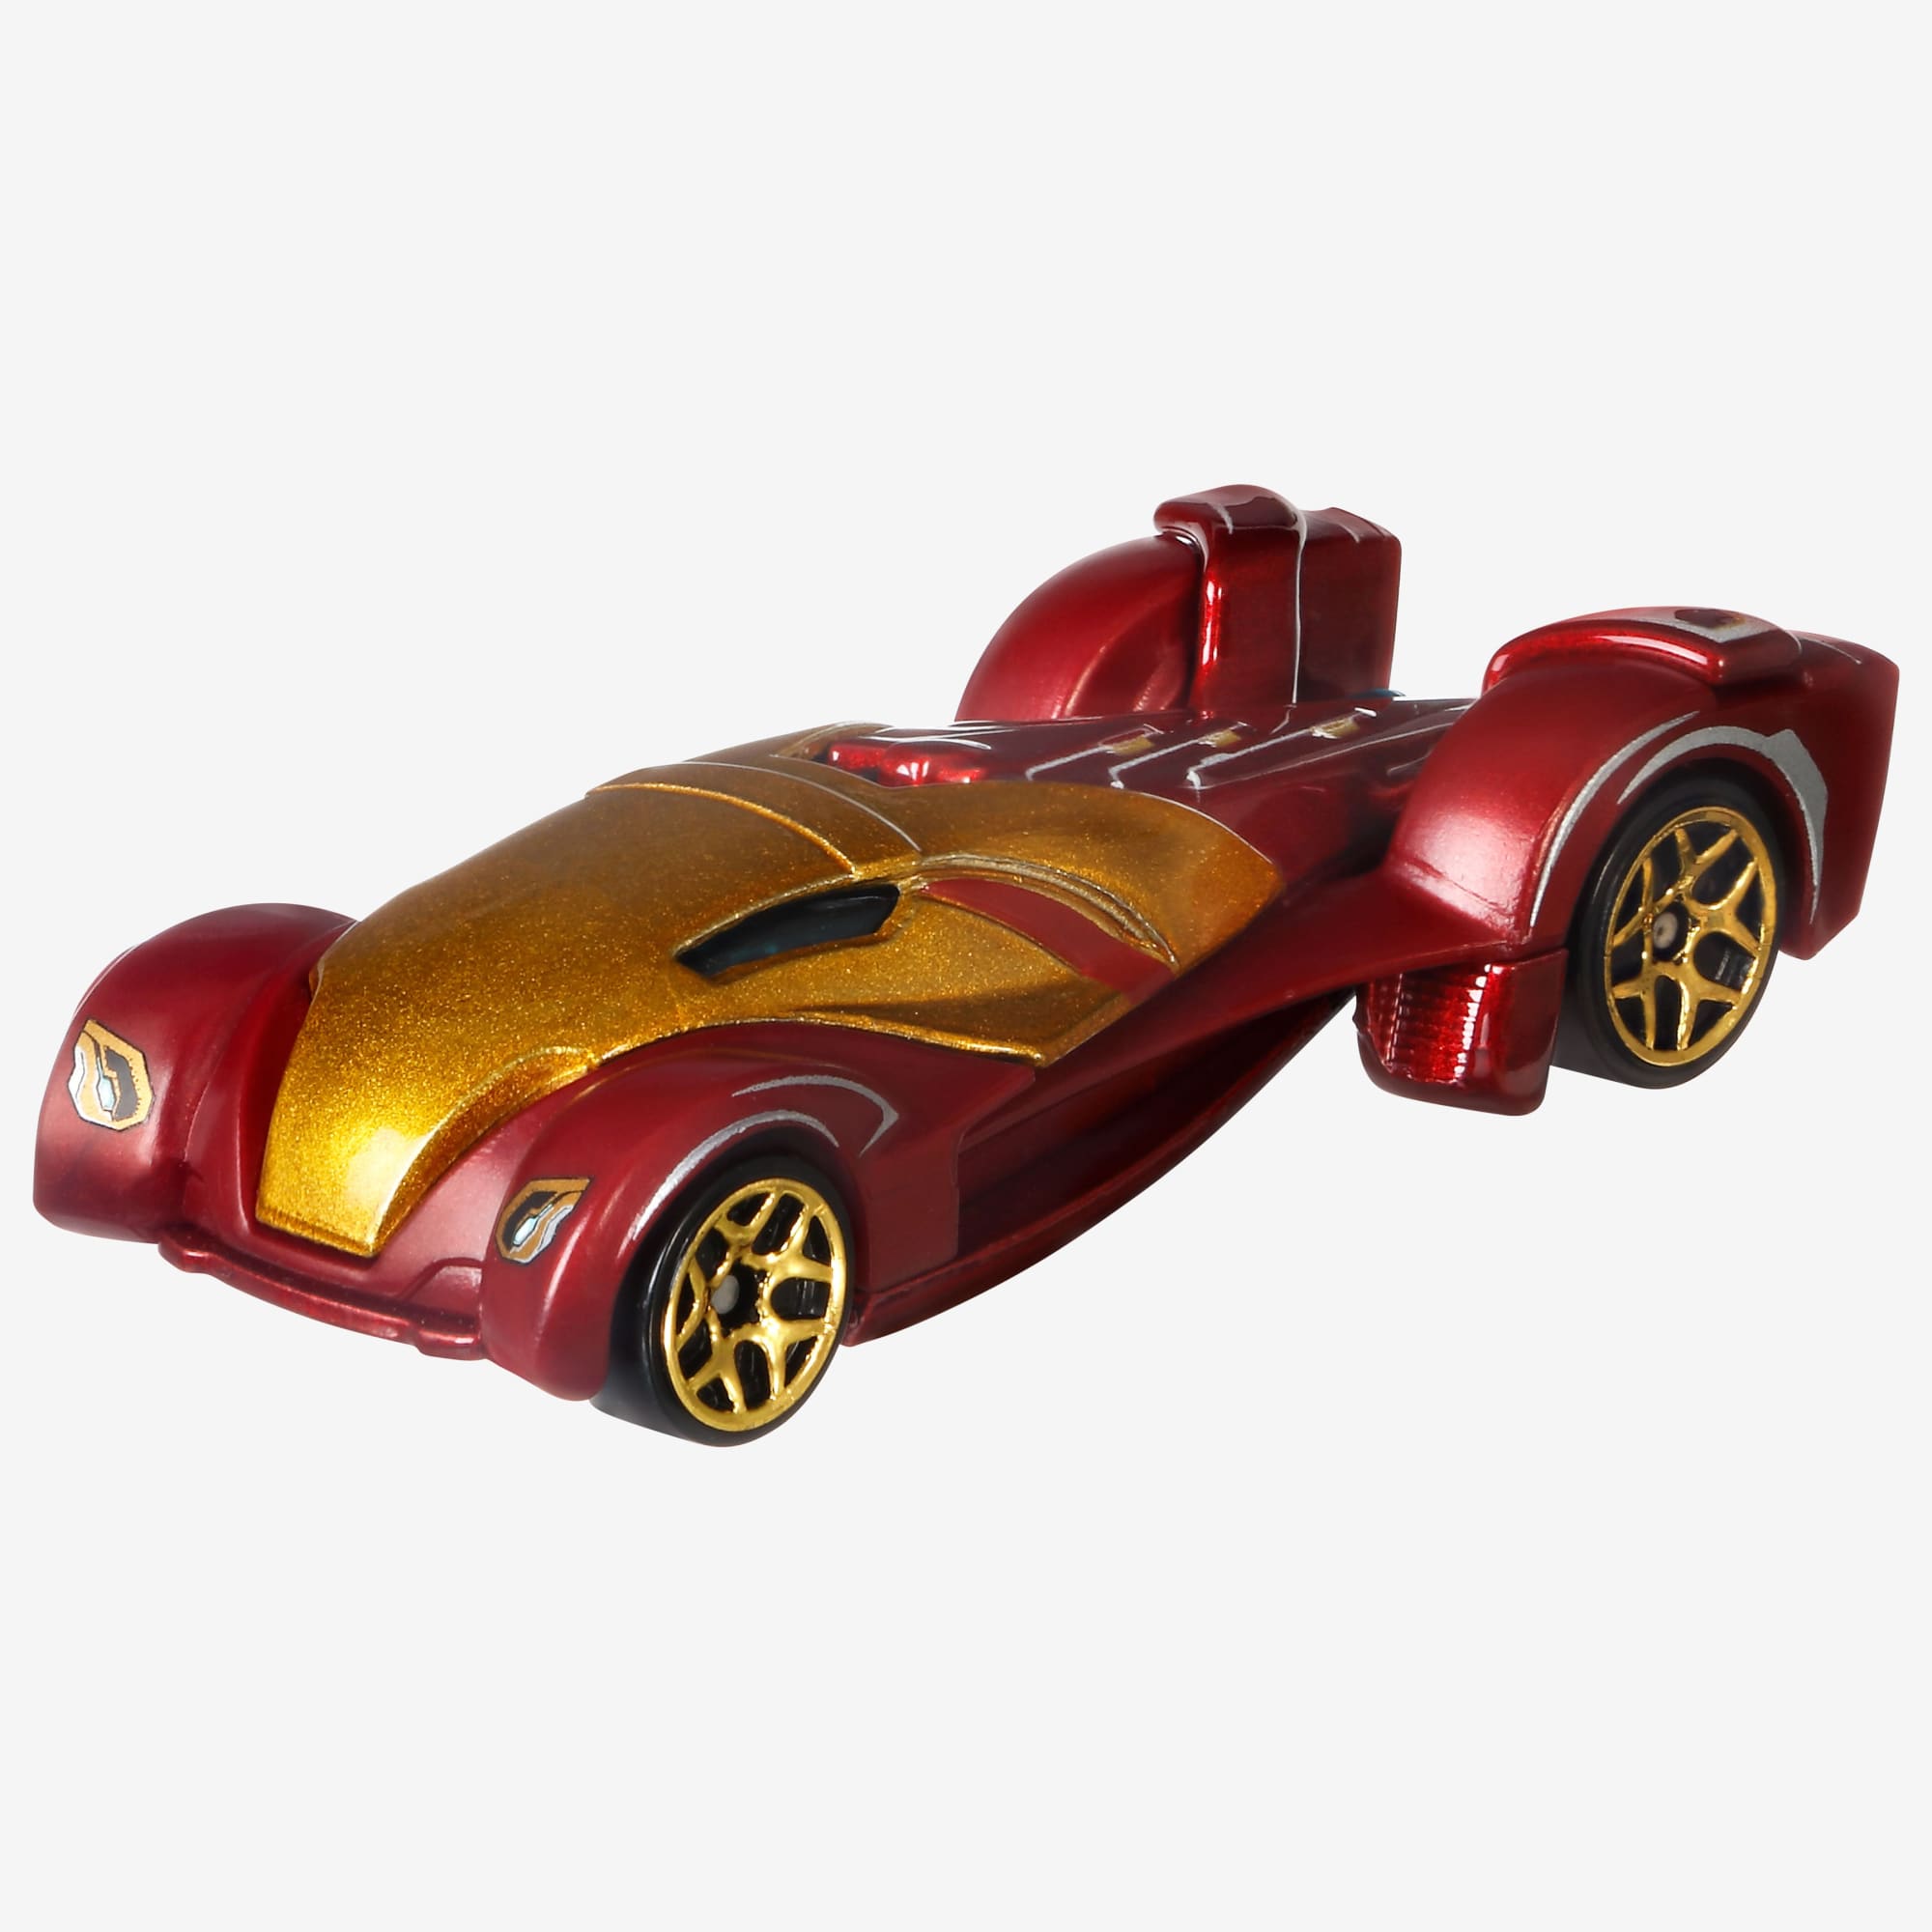 Hot Wheels Character Cars Marvel Avengers 5 Pack Vehicles Mattel Creations